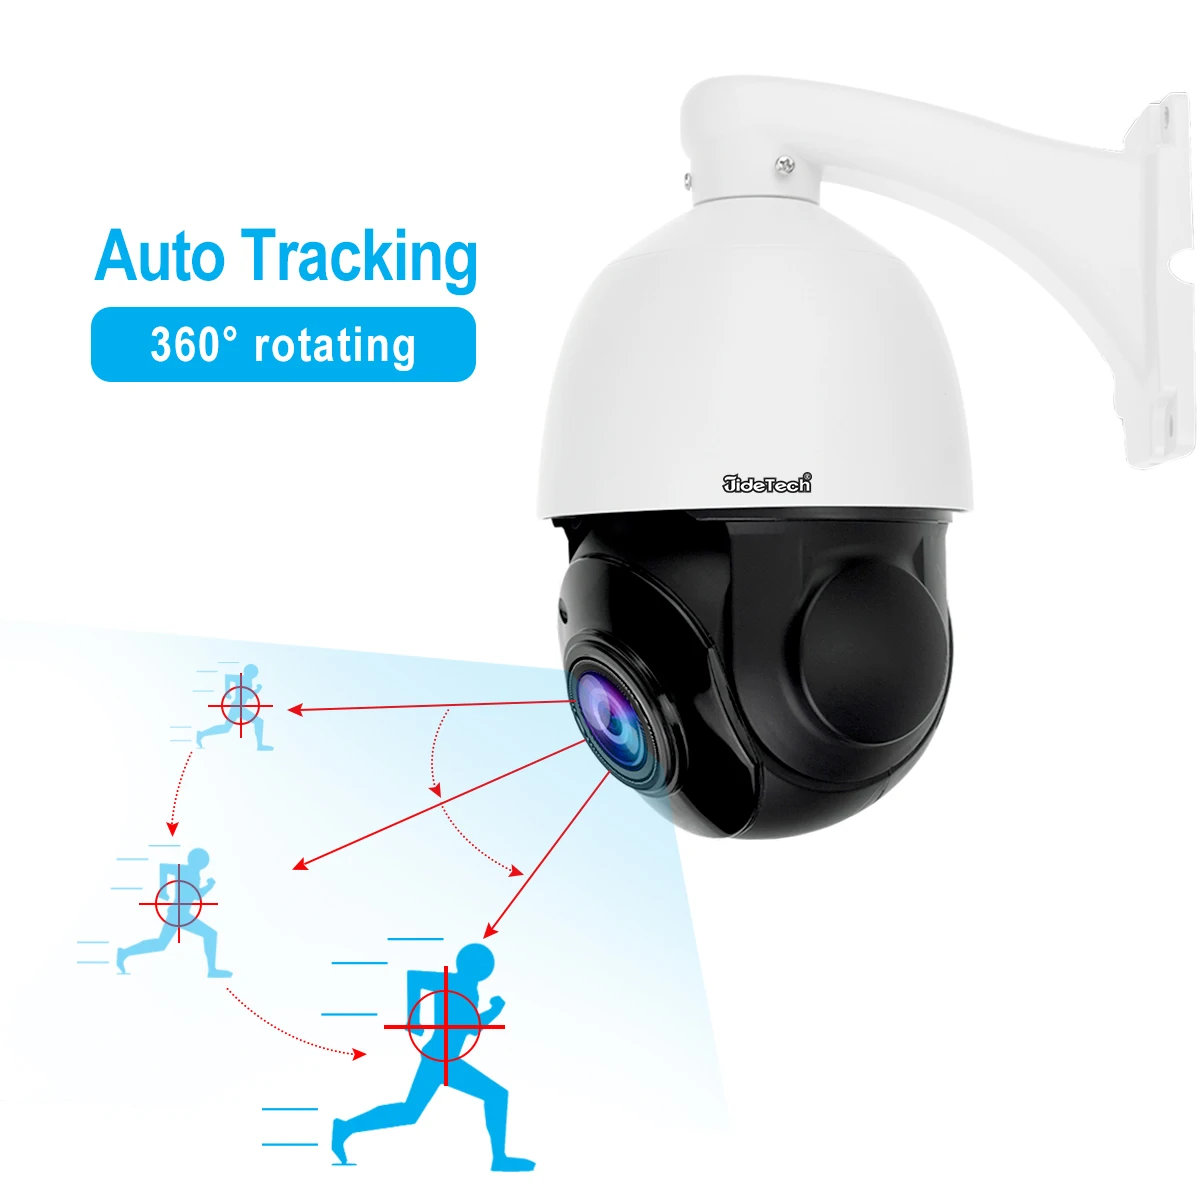 Auto-Tracking Camera